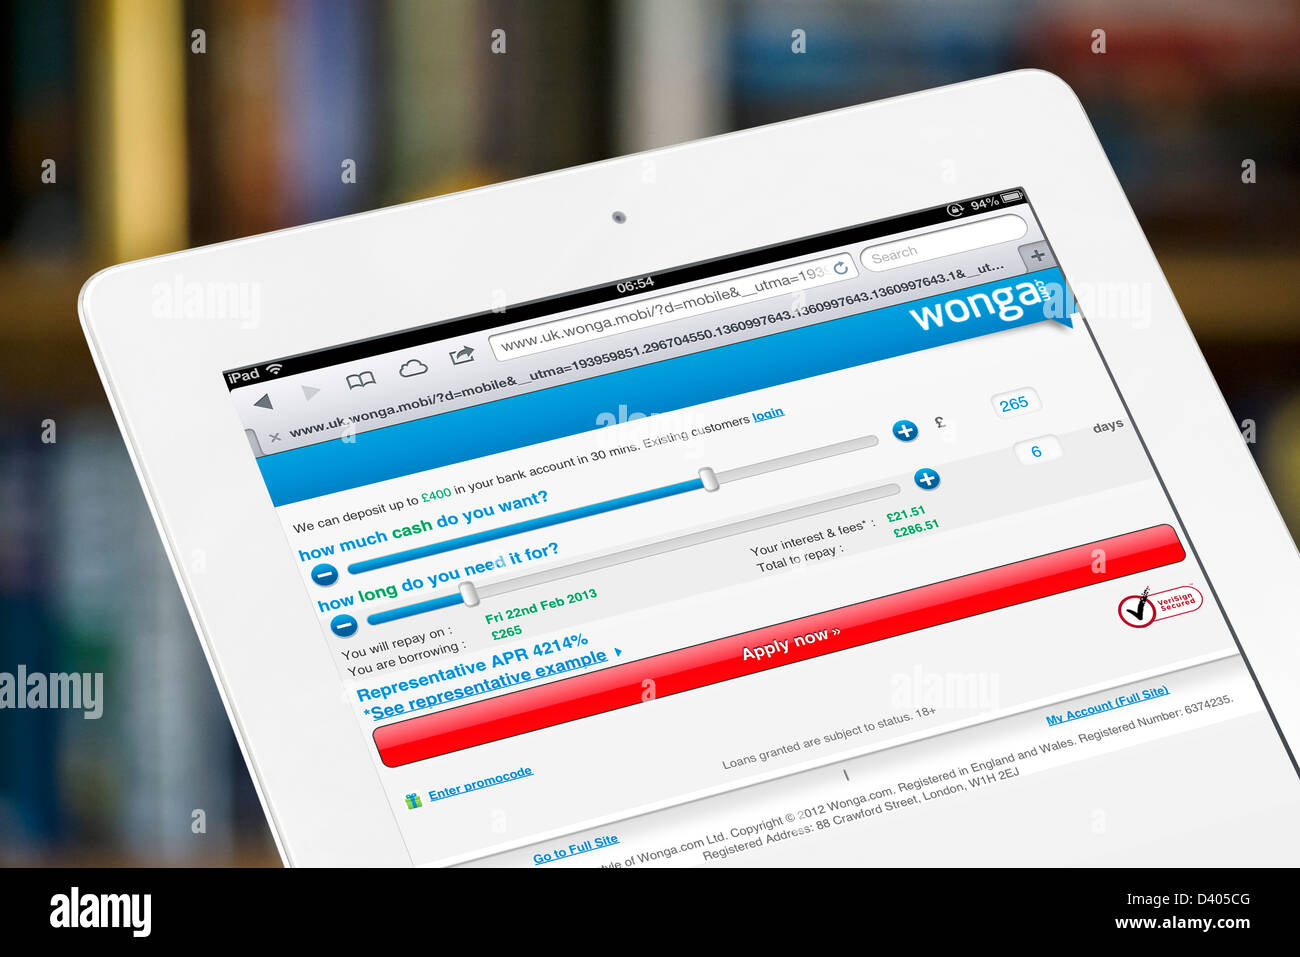 Loan application calculator on the Wonga.com paday loan site viewed on a 4th generation iPad, UK Stock Photo